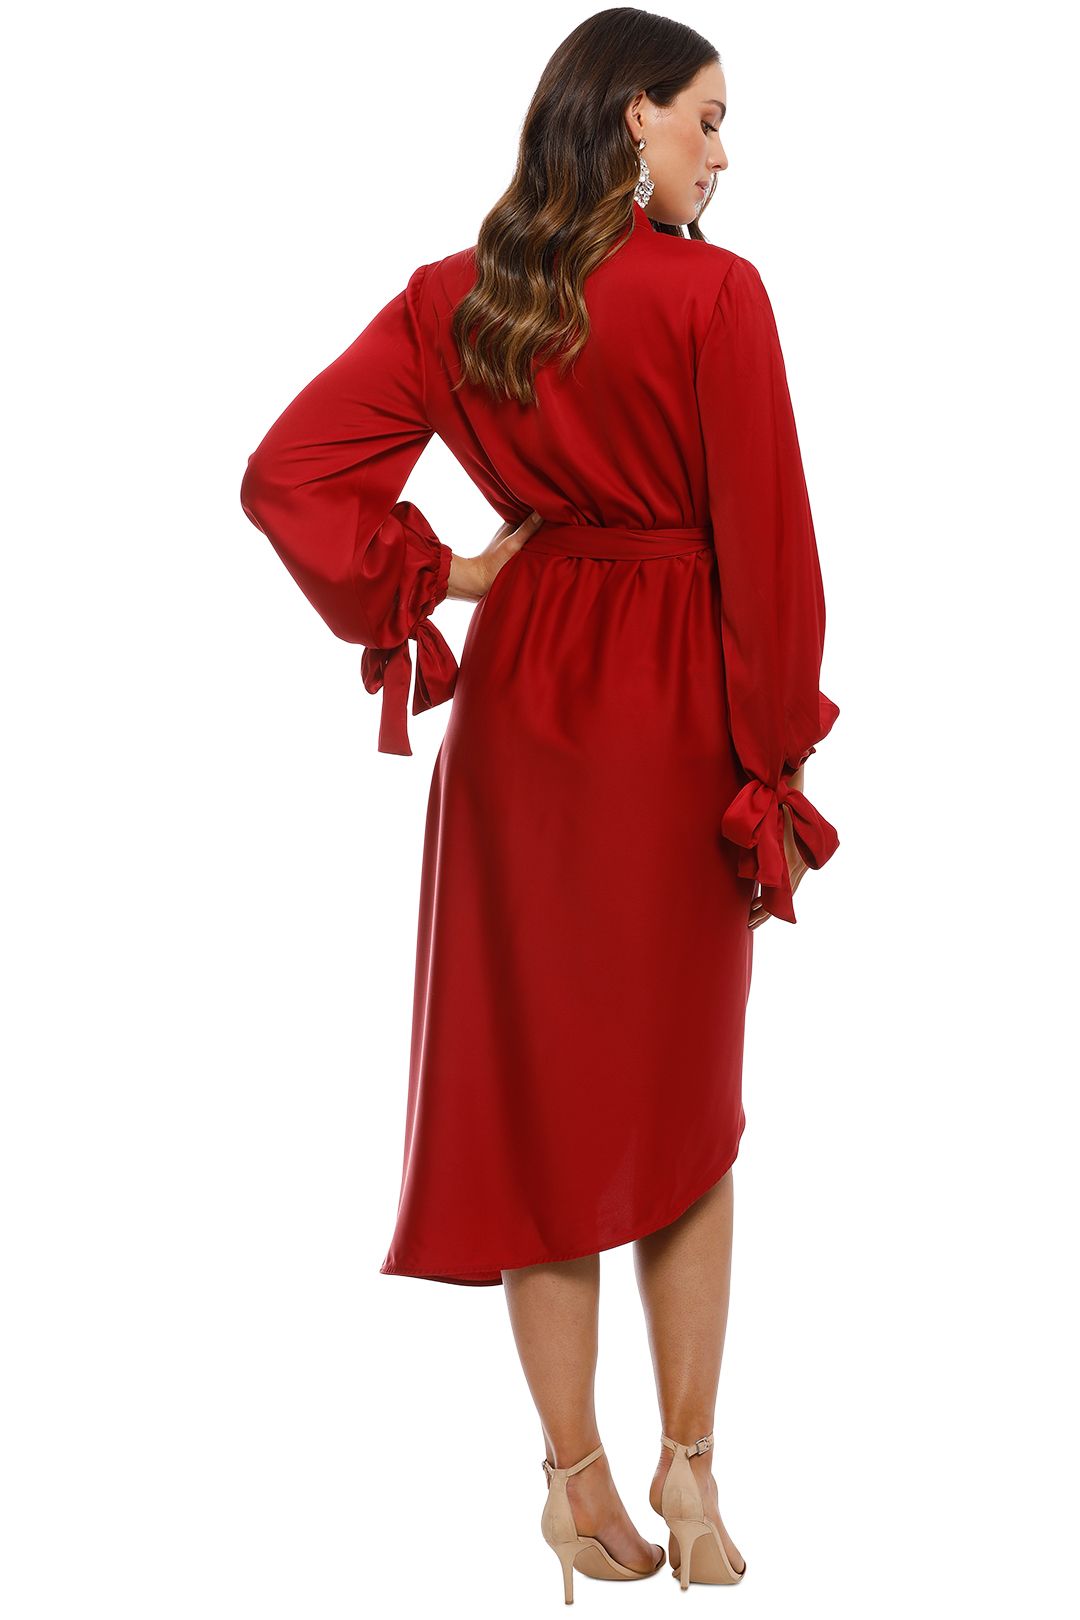 CMEO Collective - Influential LS Dress - Crimson - Back